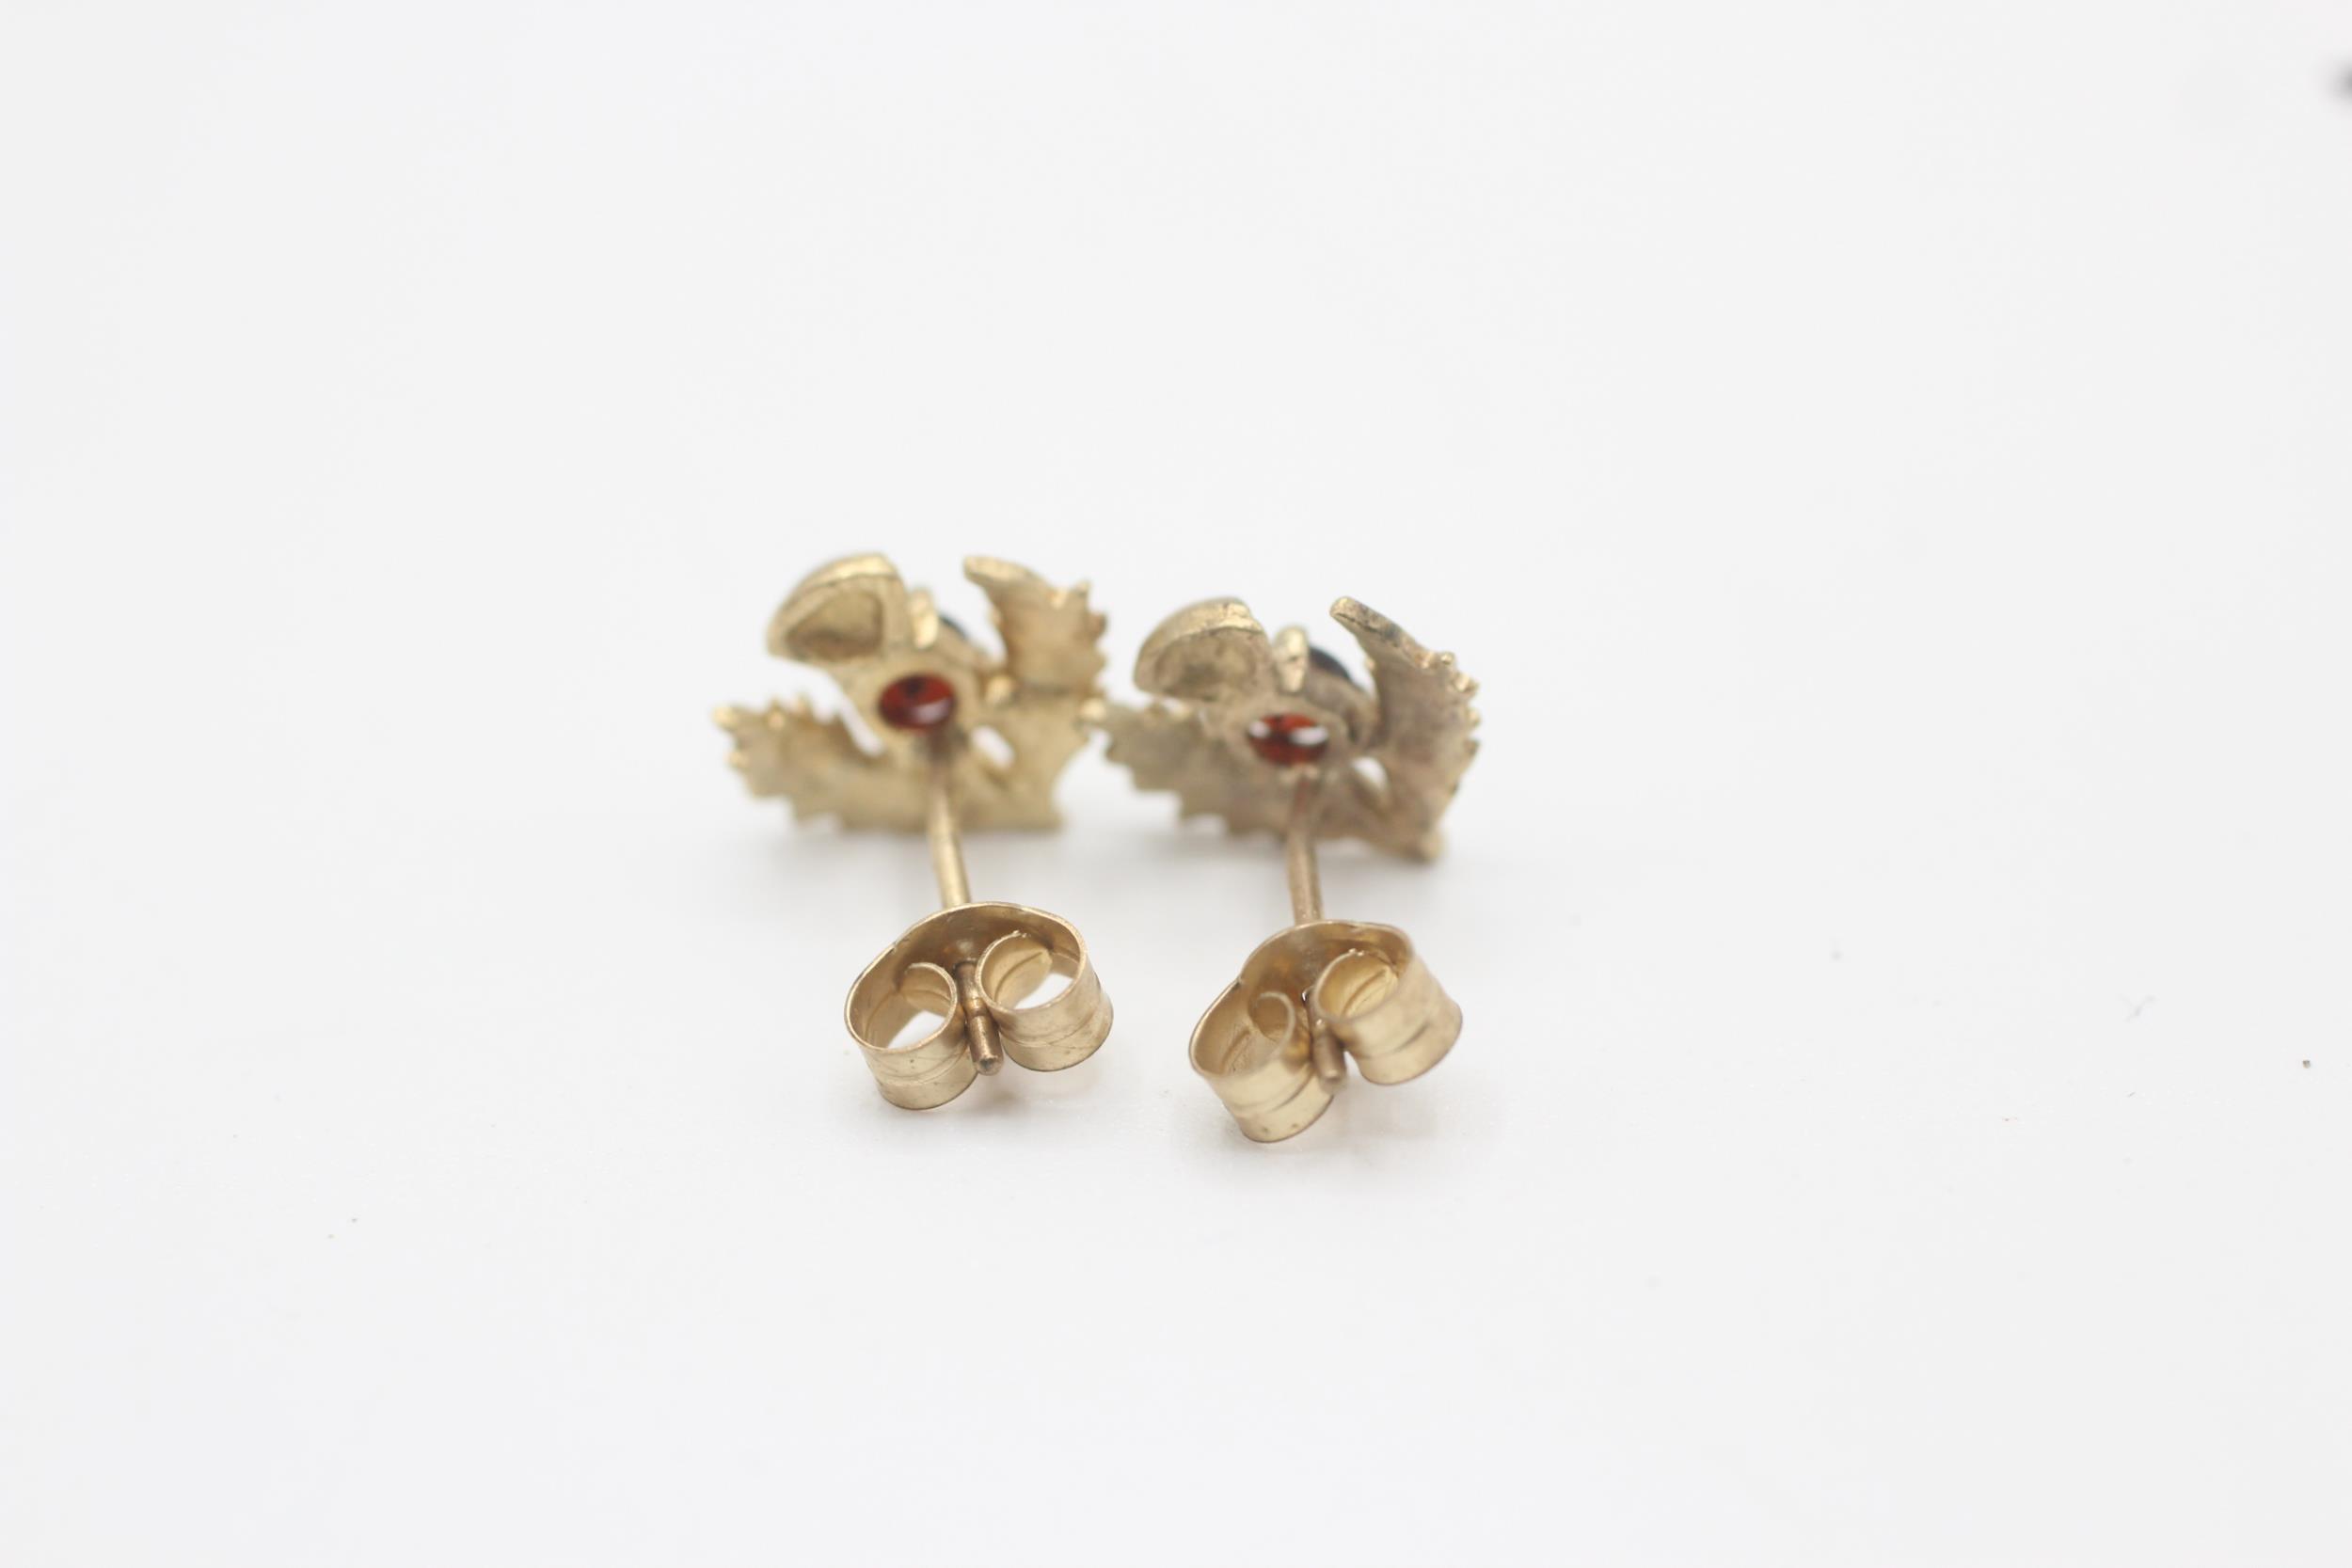 9ct gold garnet stud earrings, with scroll backs - 1.1 g - Image 4 of 5